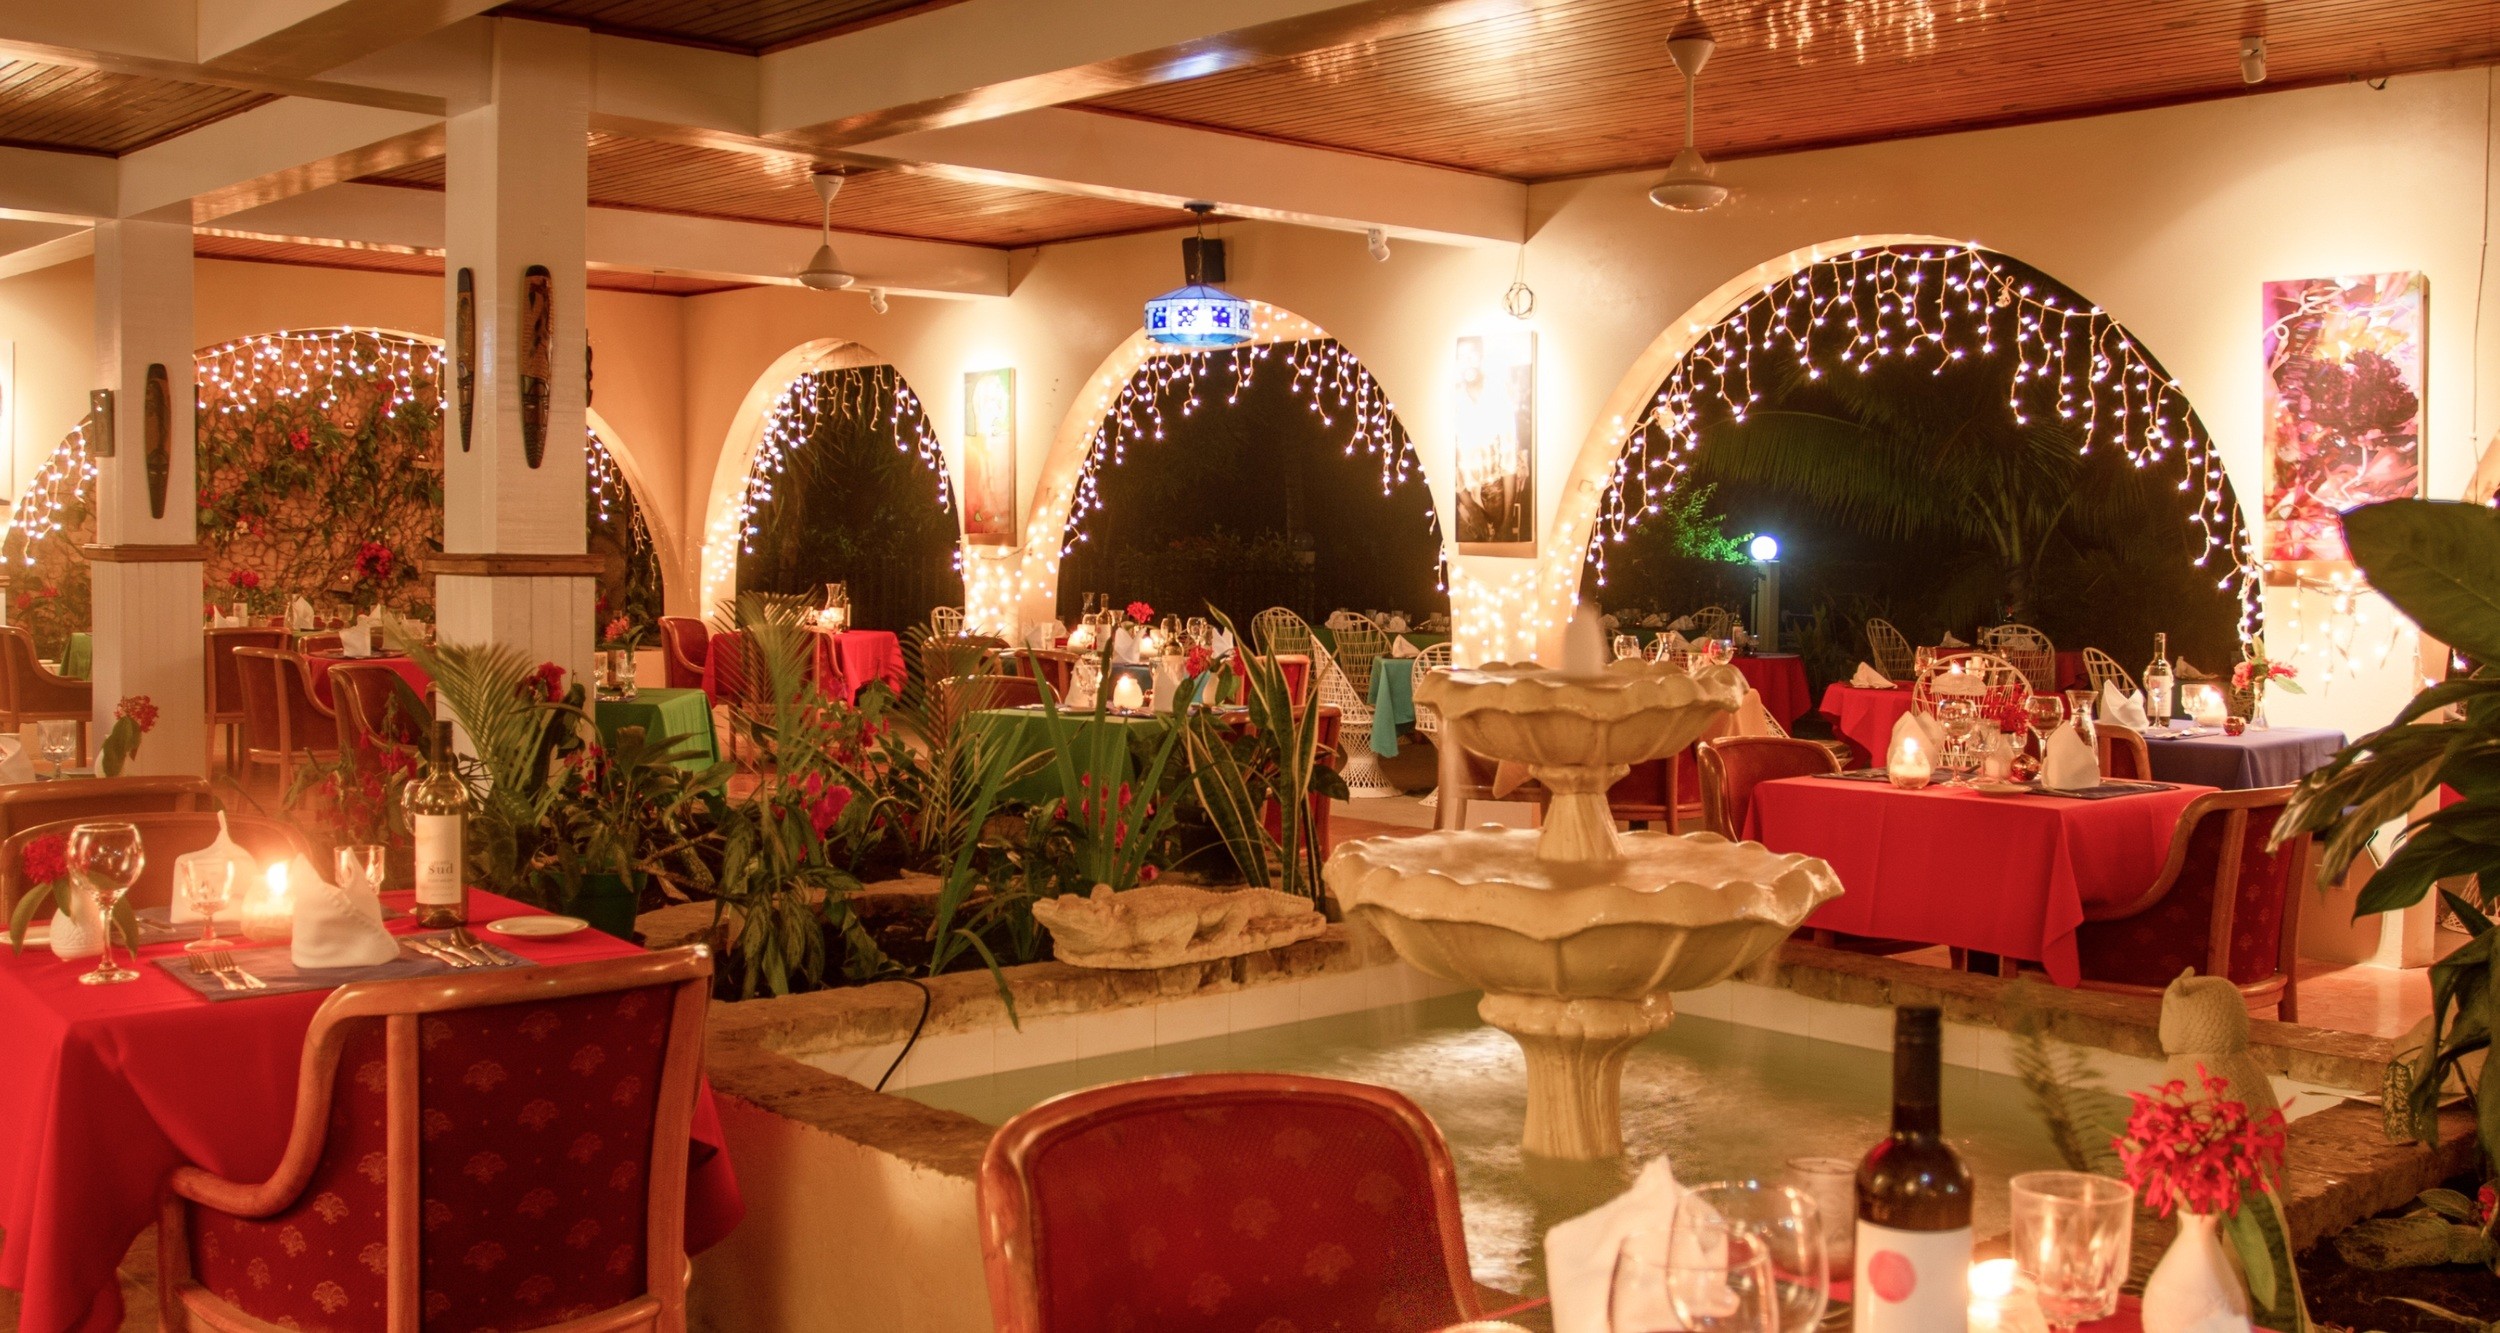 Charela Inn Restaurant | Home Featured Image